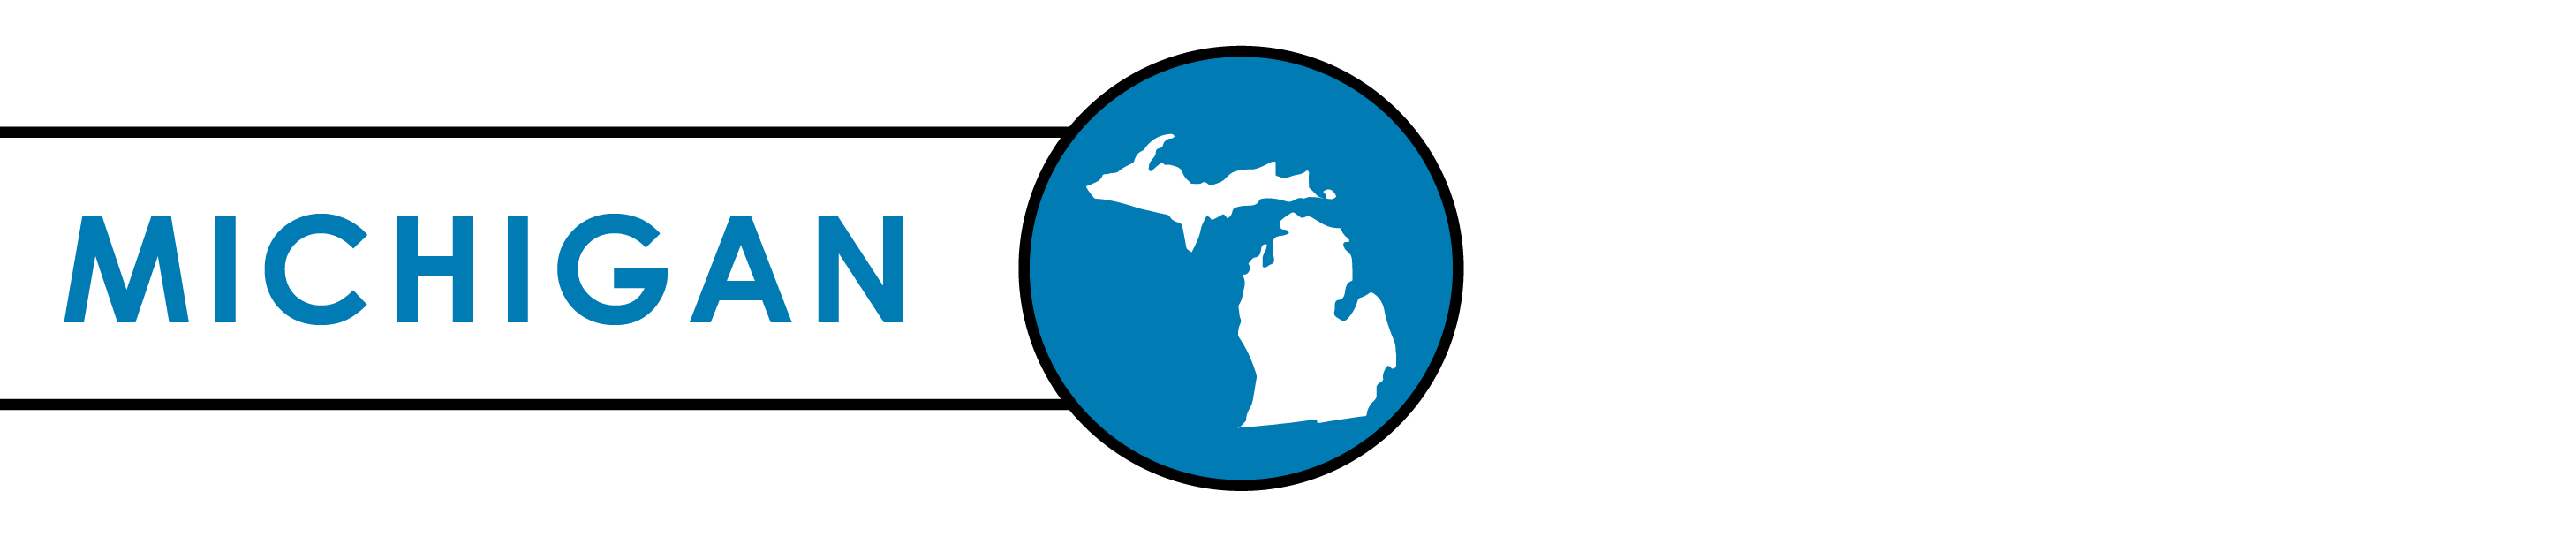 Michigan banner